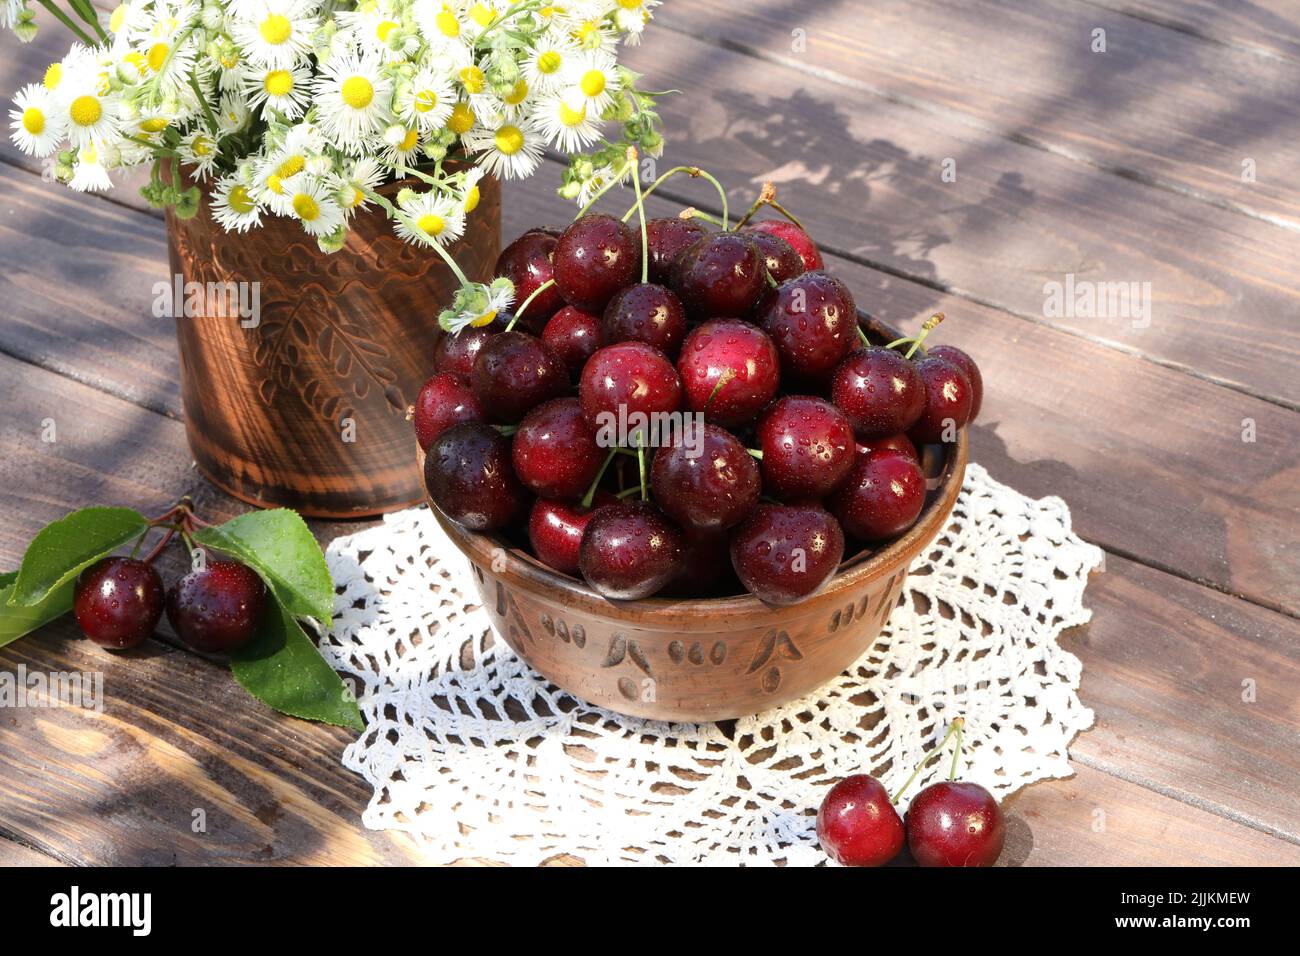 sweet cherries on wooden table in the garden Stock Photo